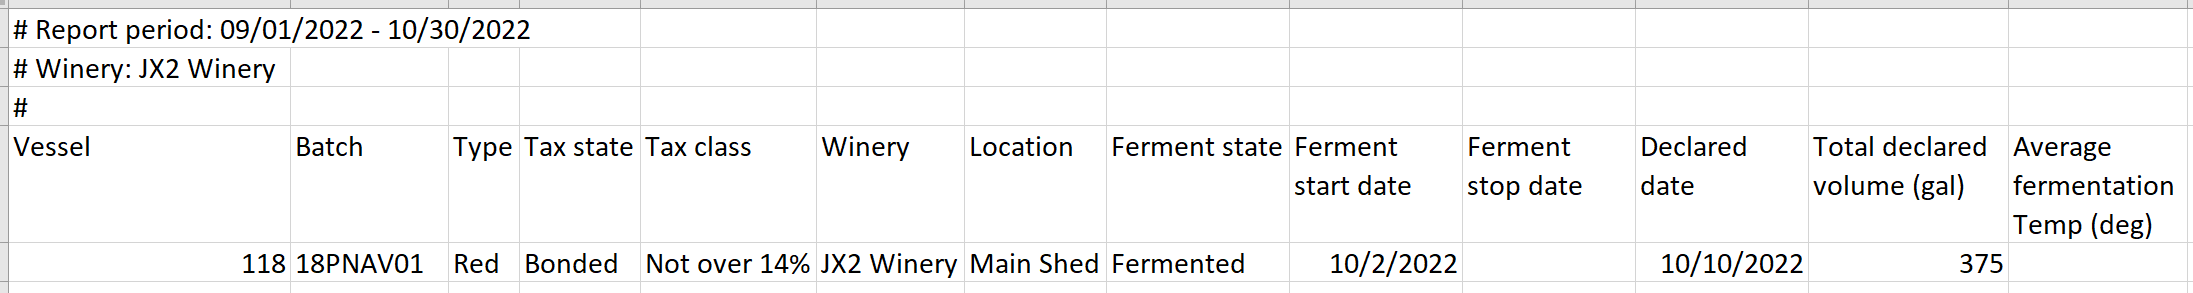 Ferment_Details_Report_-_Example_2.1.png